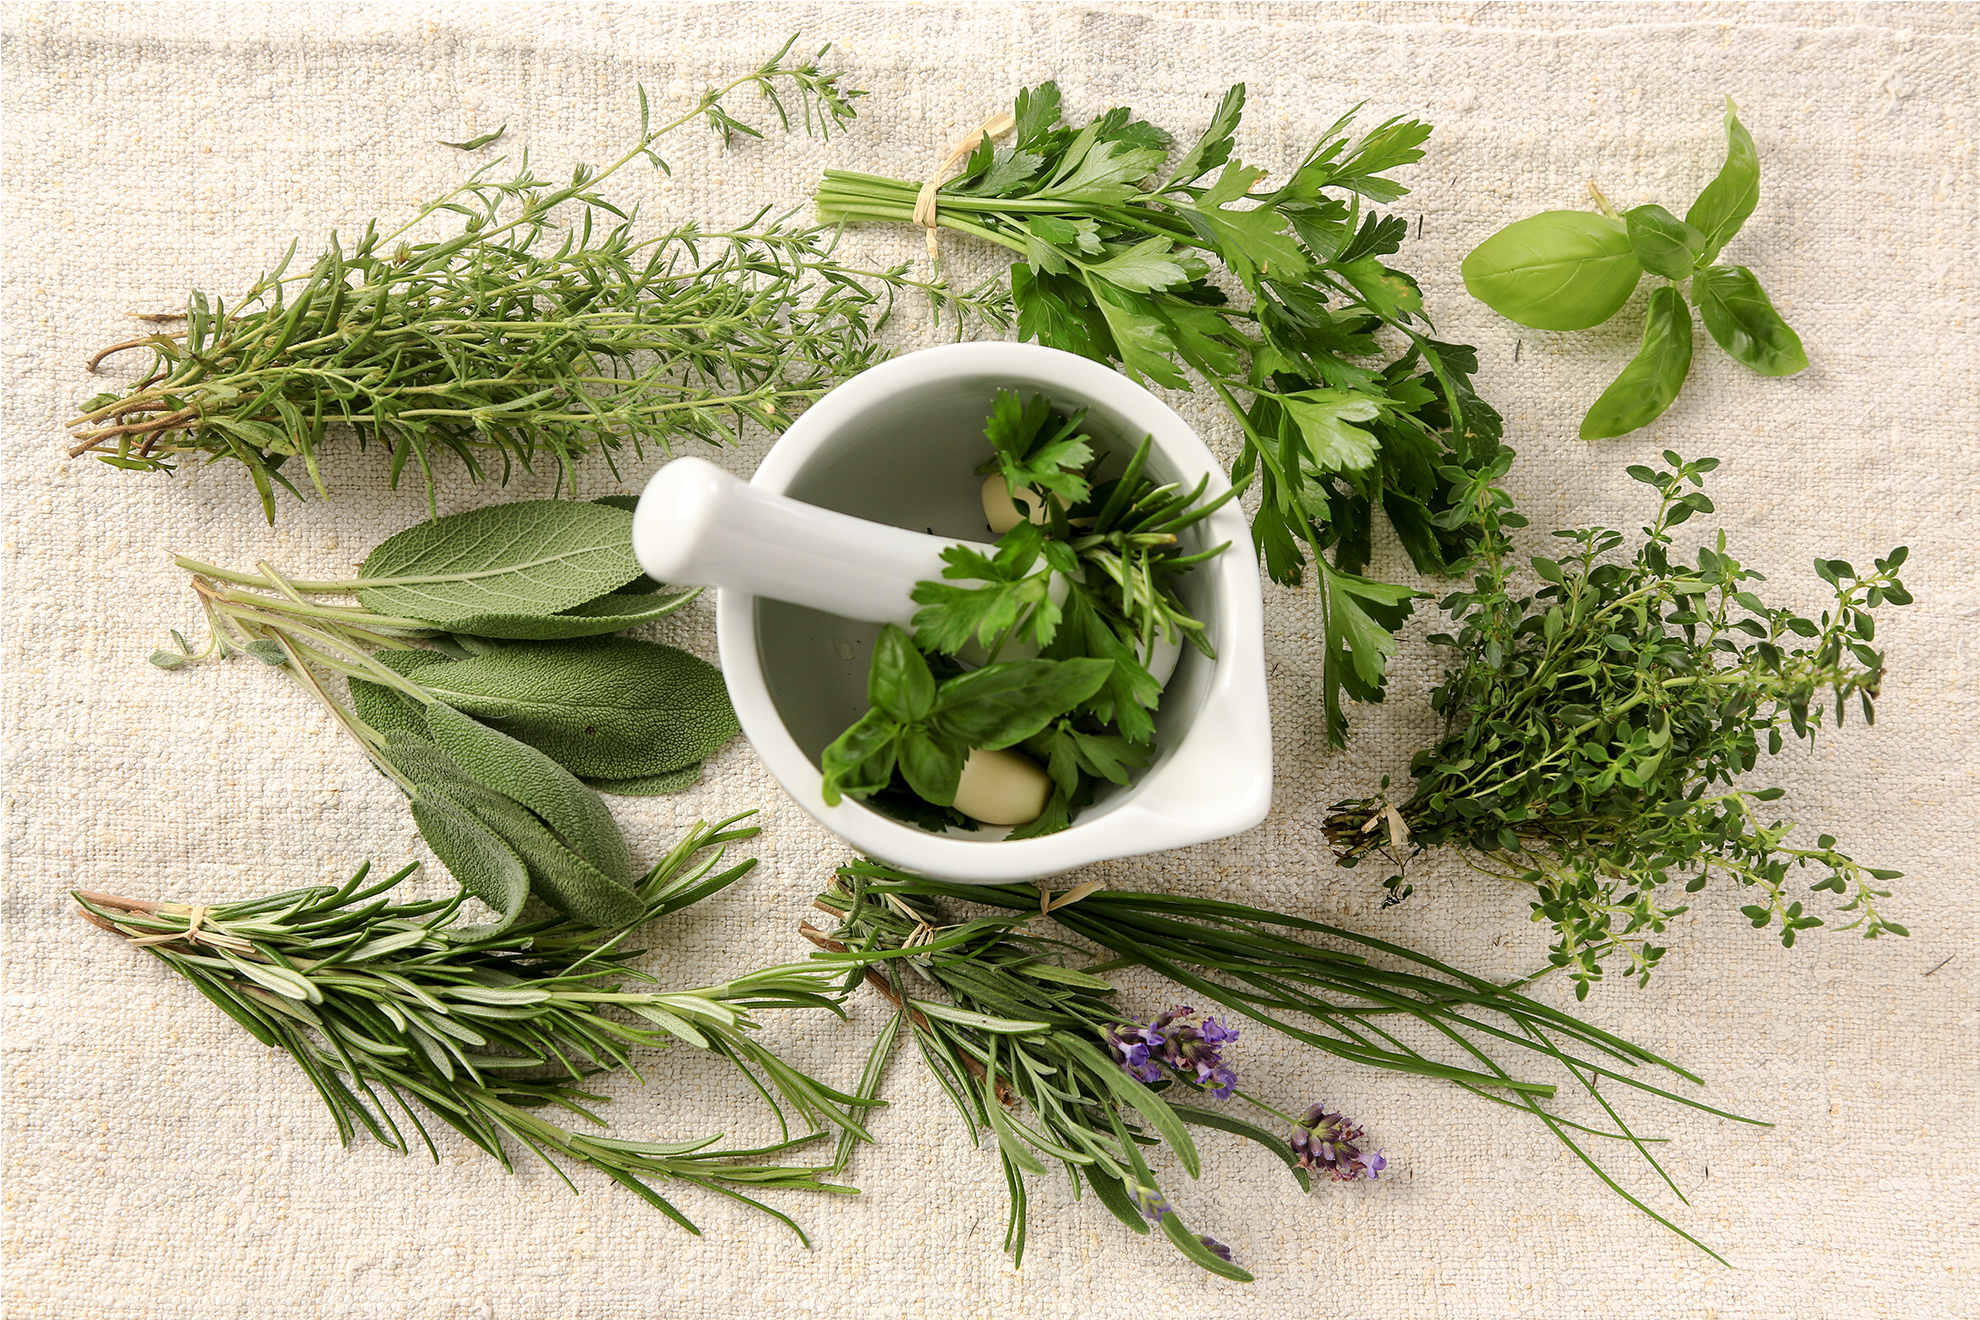 Organic herbal remedies